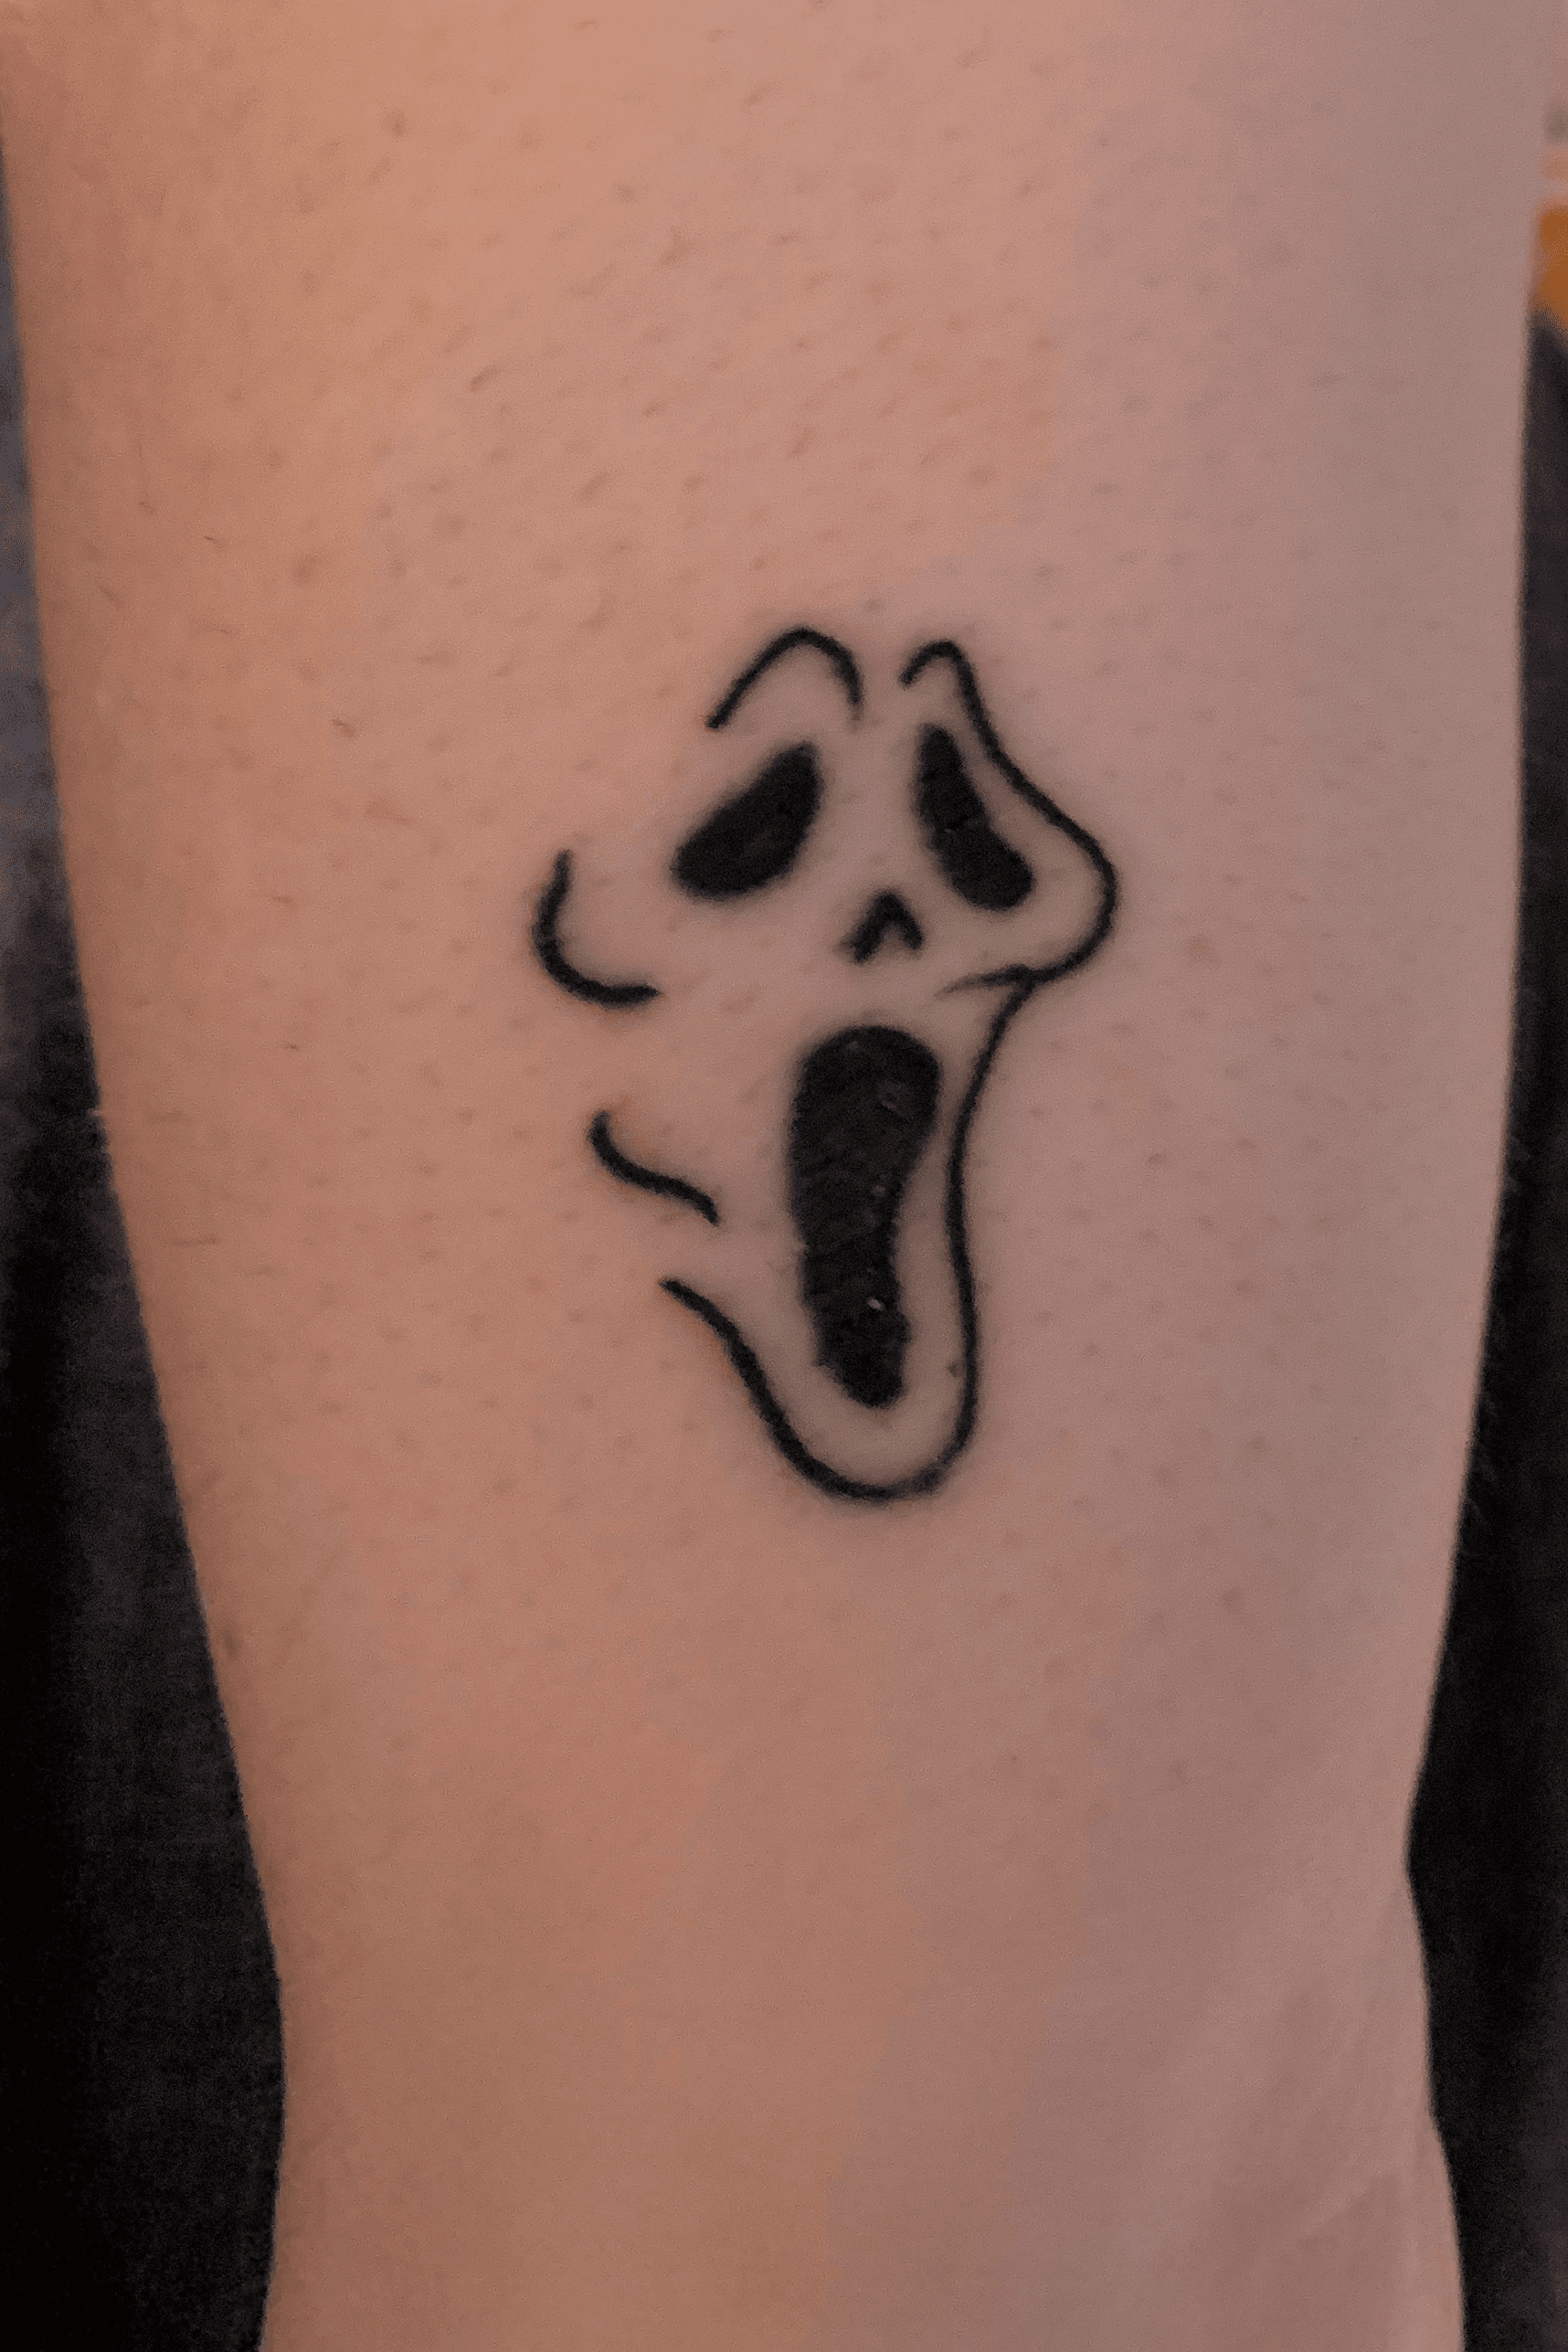 Ghostface tattooTikTok Search